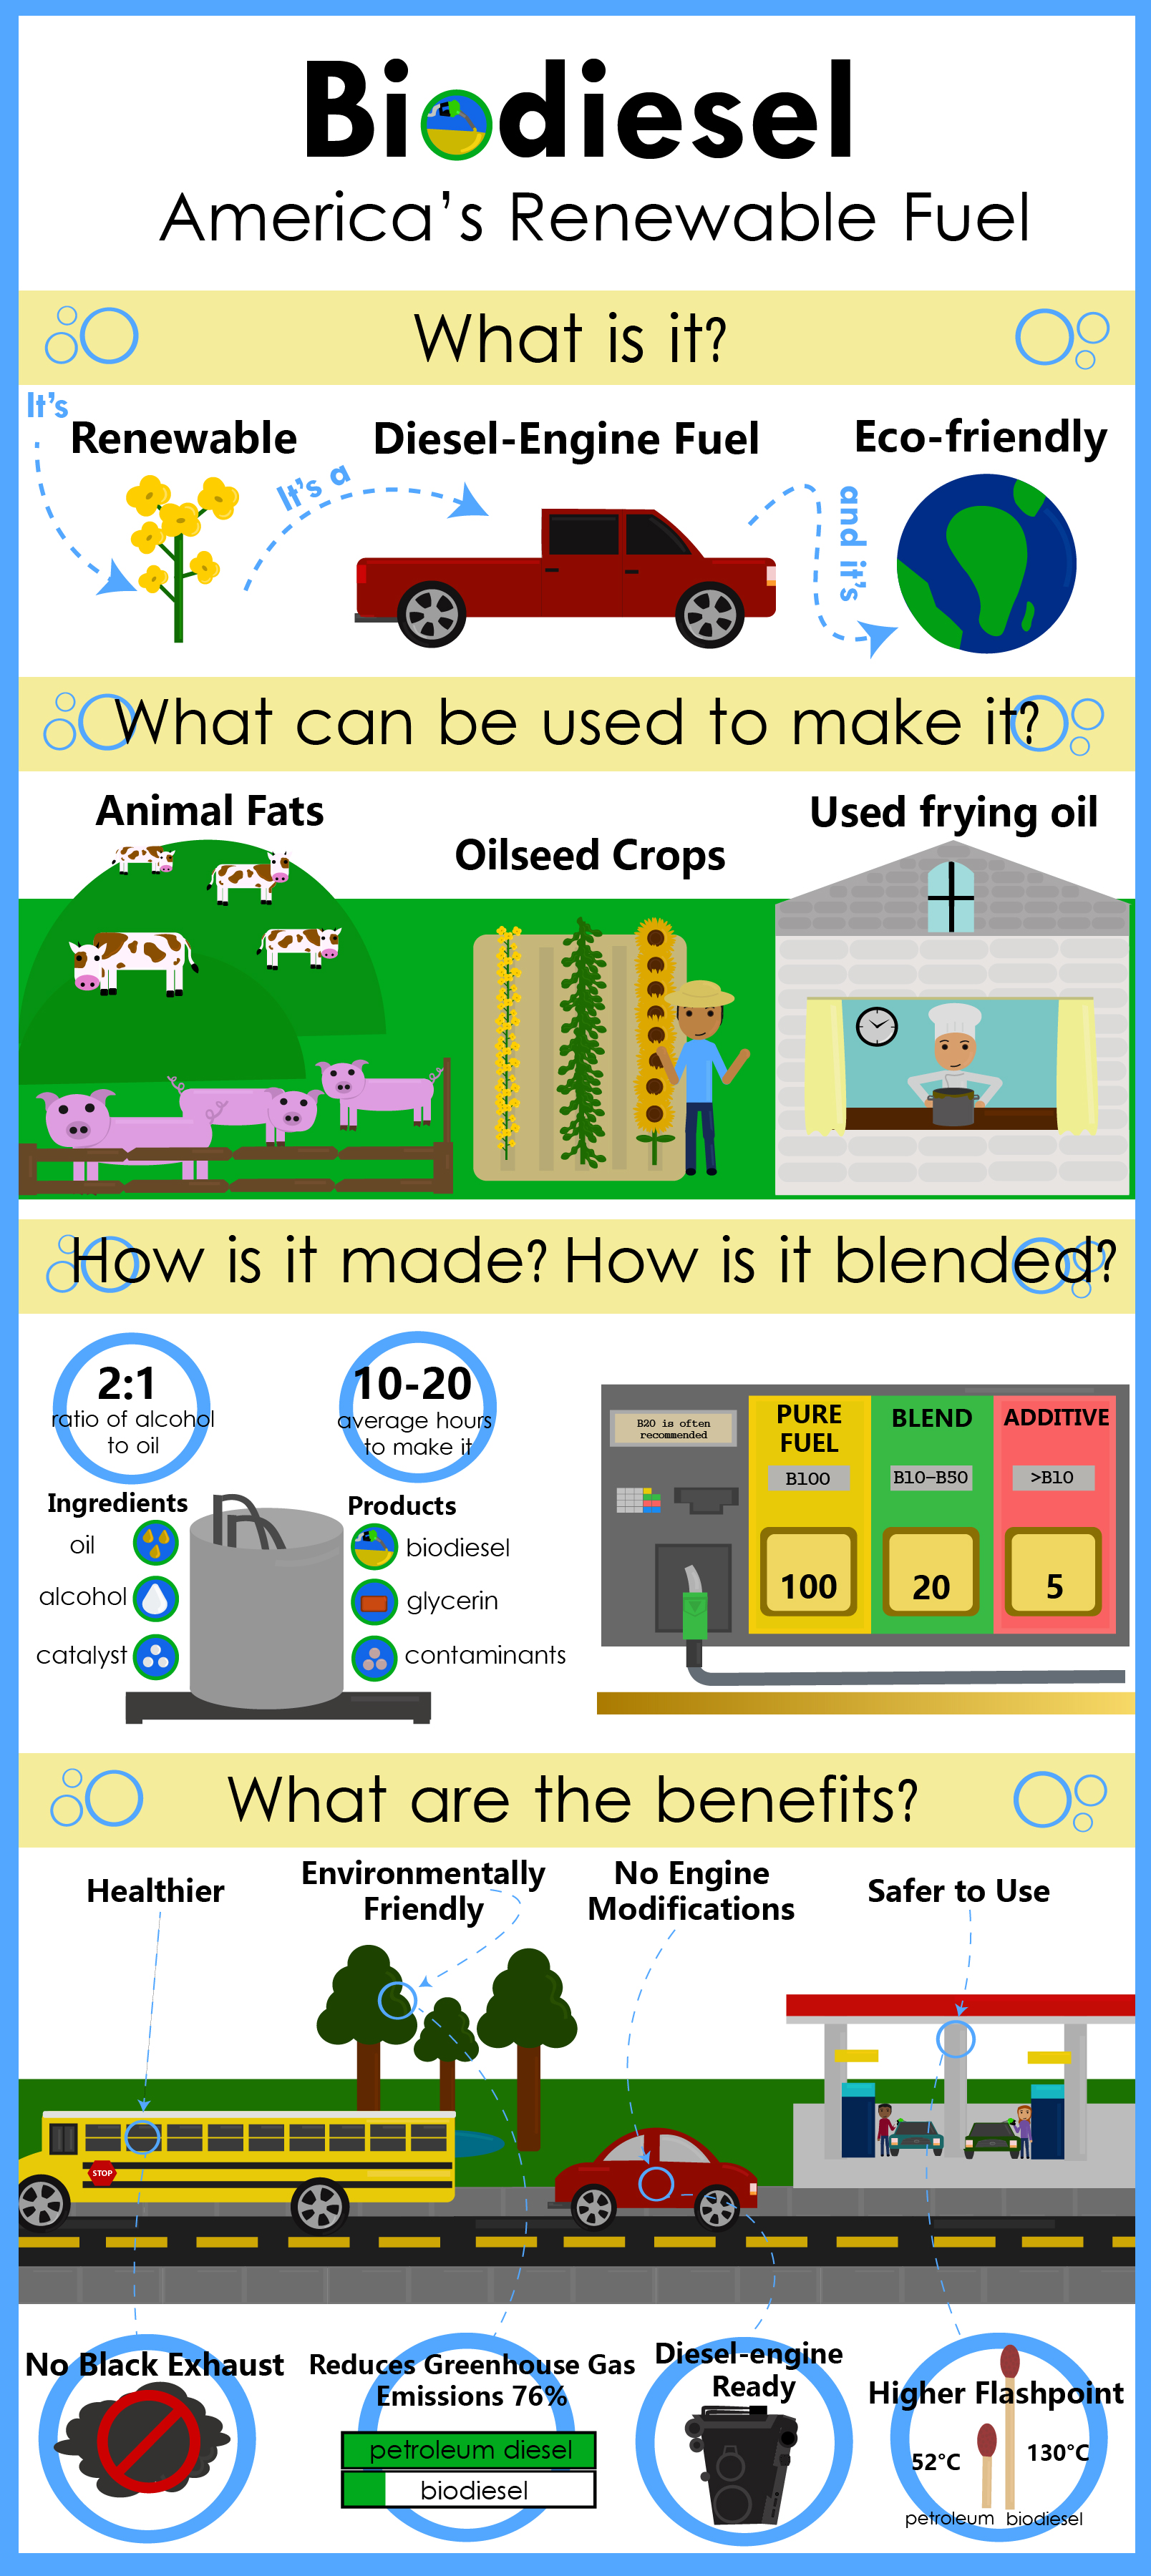 Biodiesel: America's Renewable Fuel